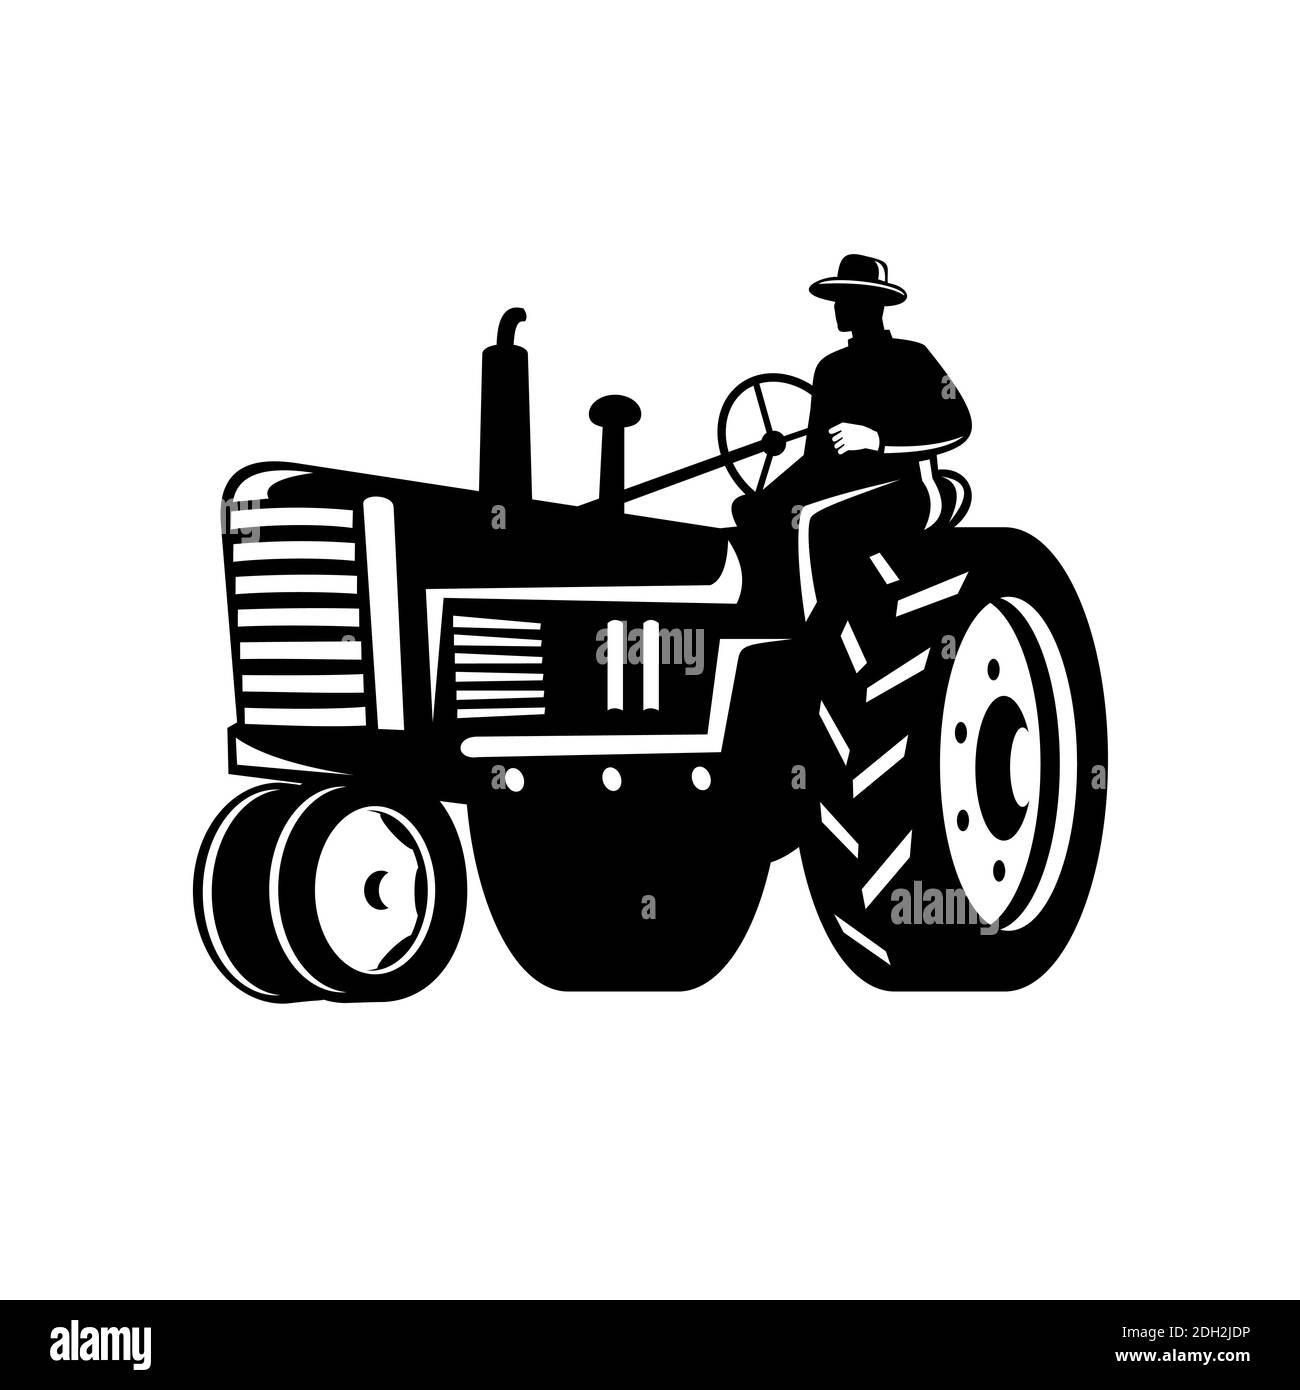 Organic Farmer Driving Vintage Tractor Retro Silhouette Black and White Stock Photo